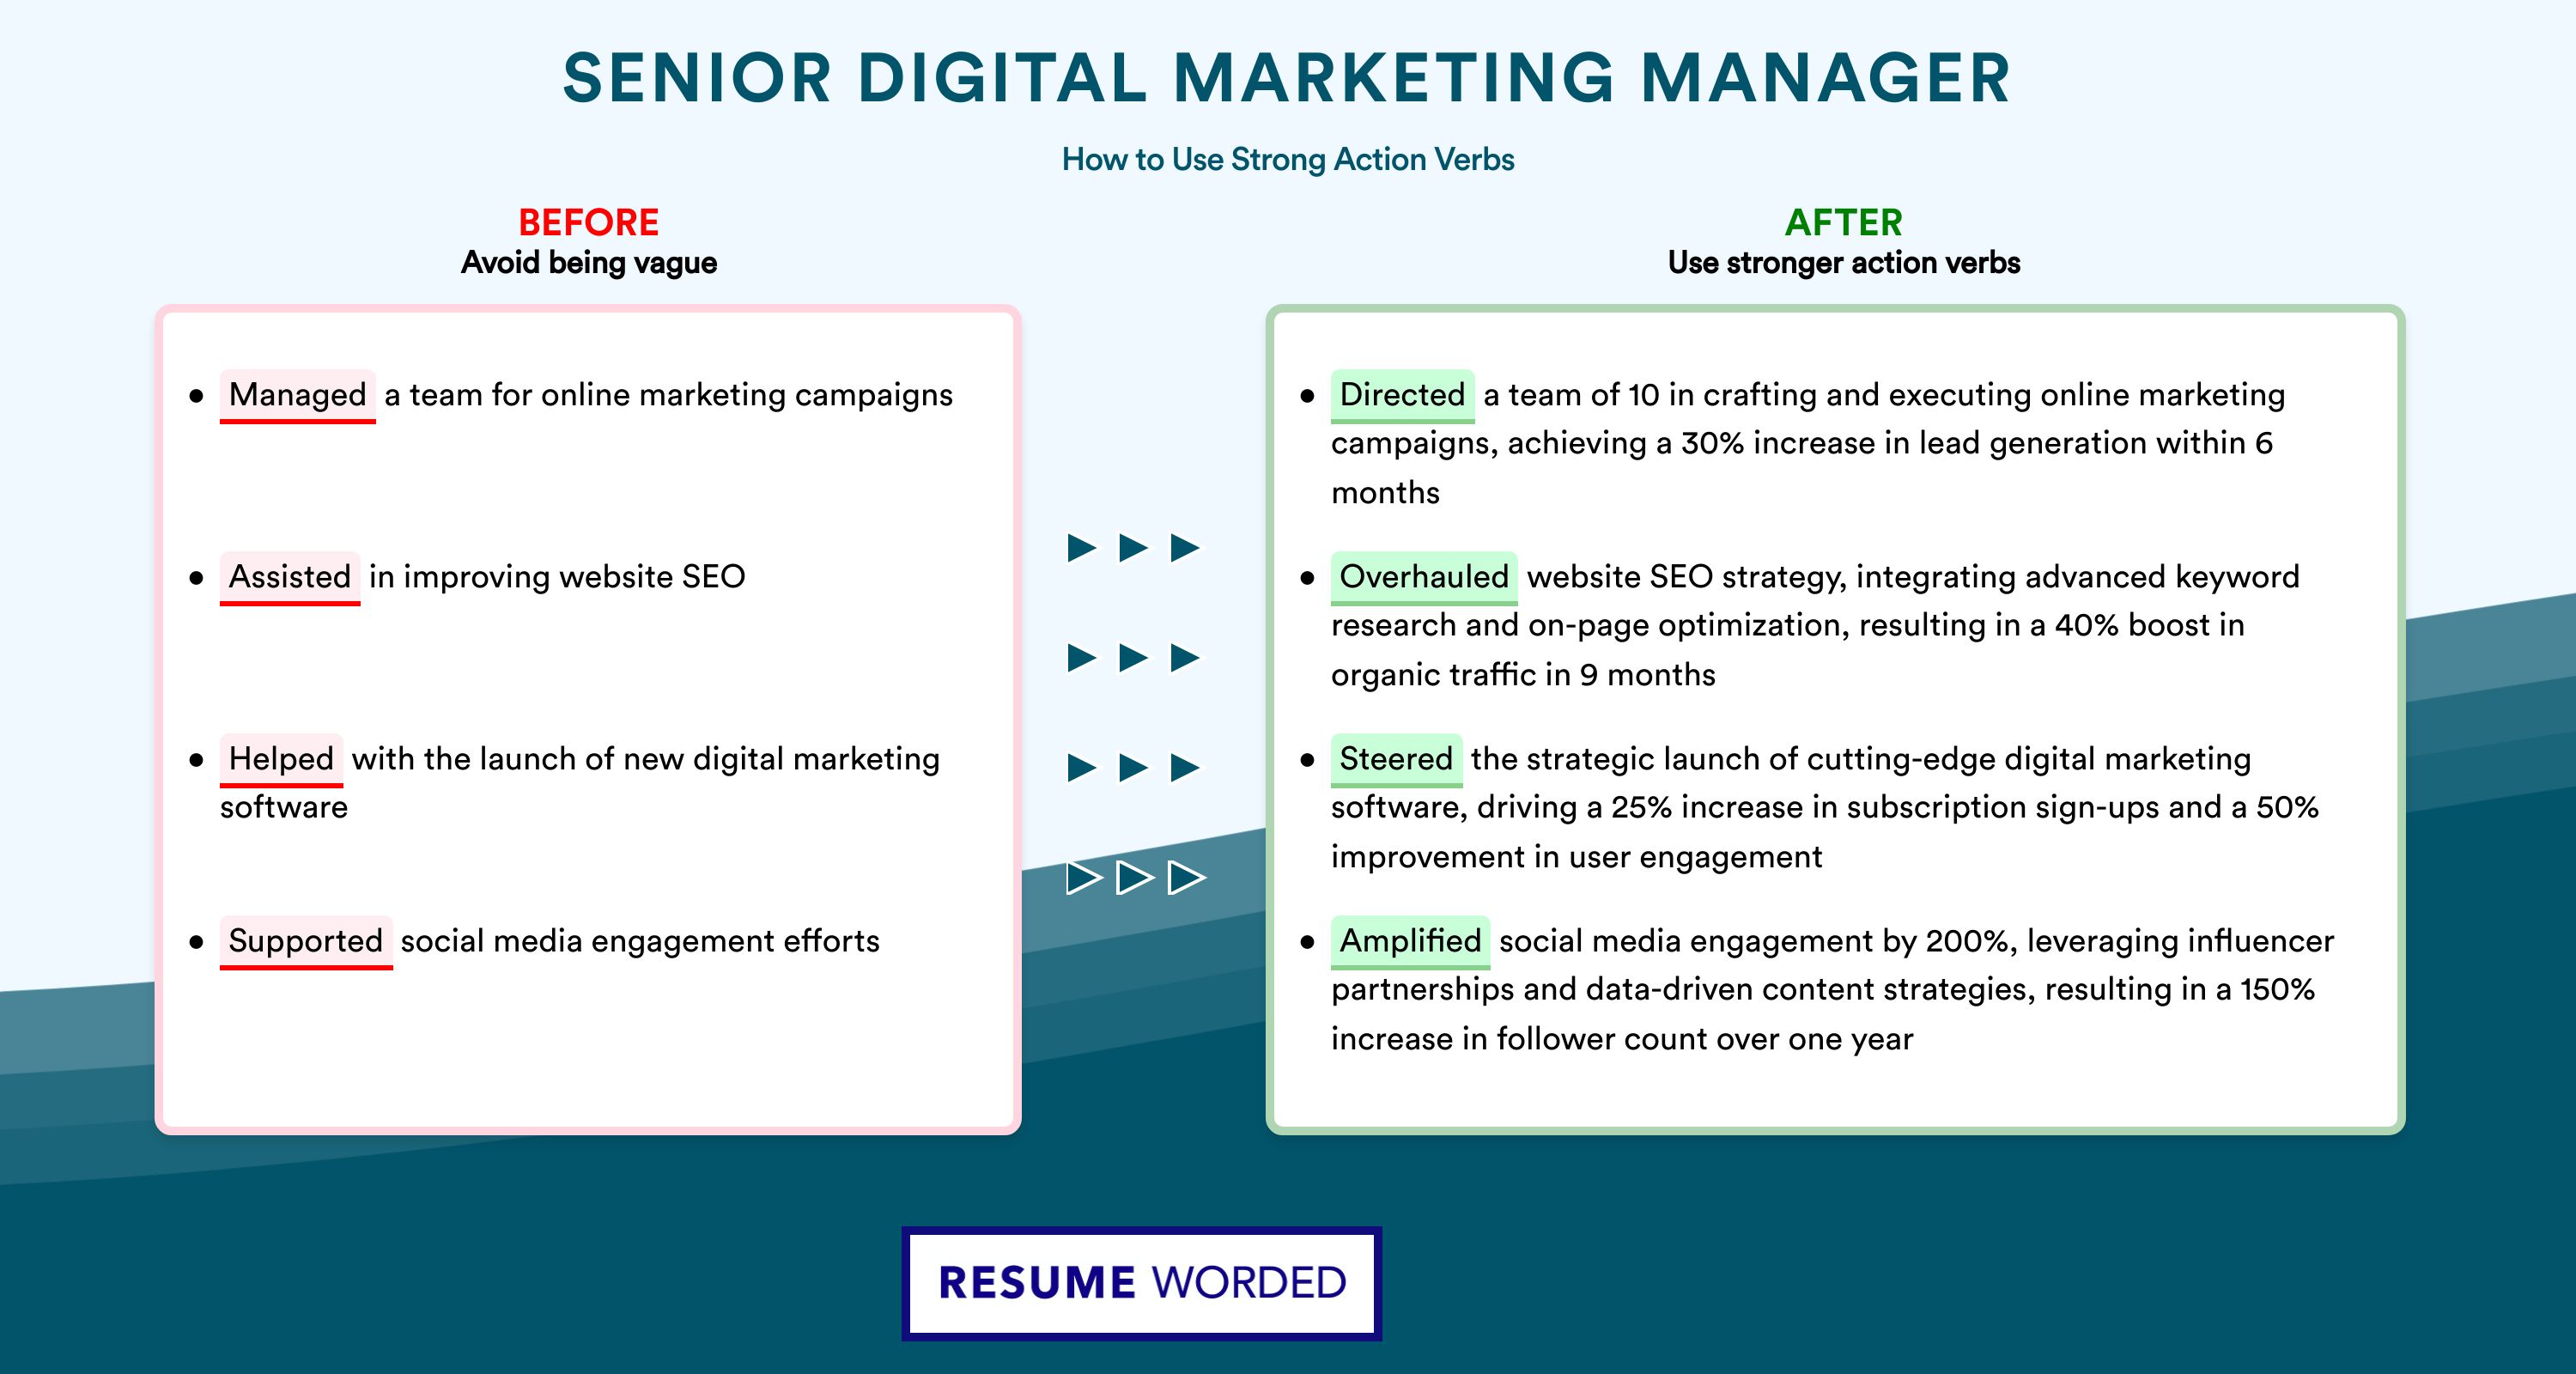 Action Verbs for Senior Digital Marketing Manager